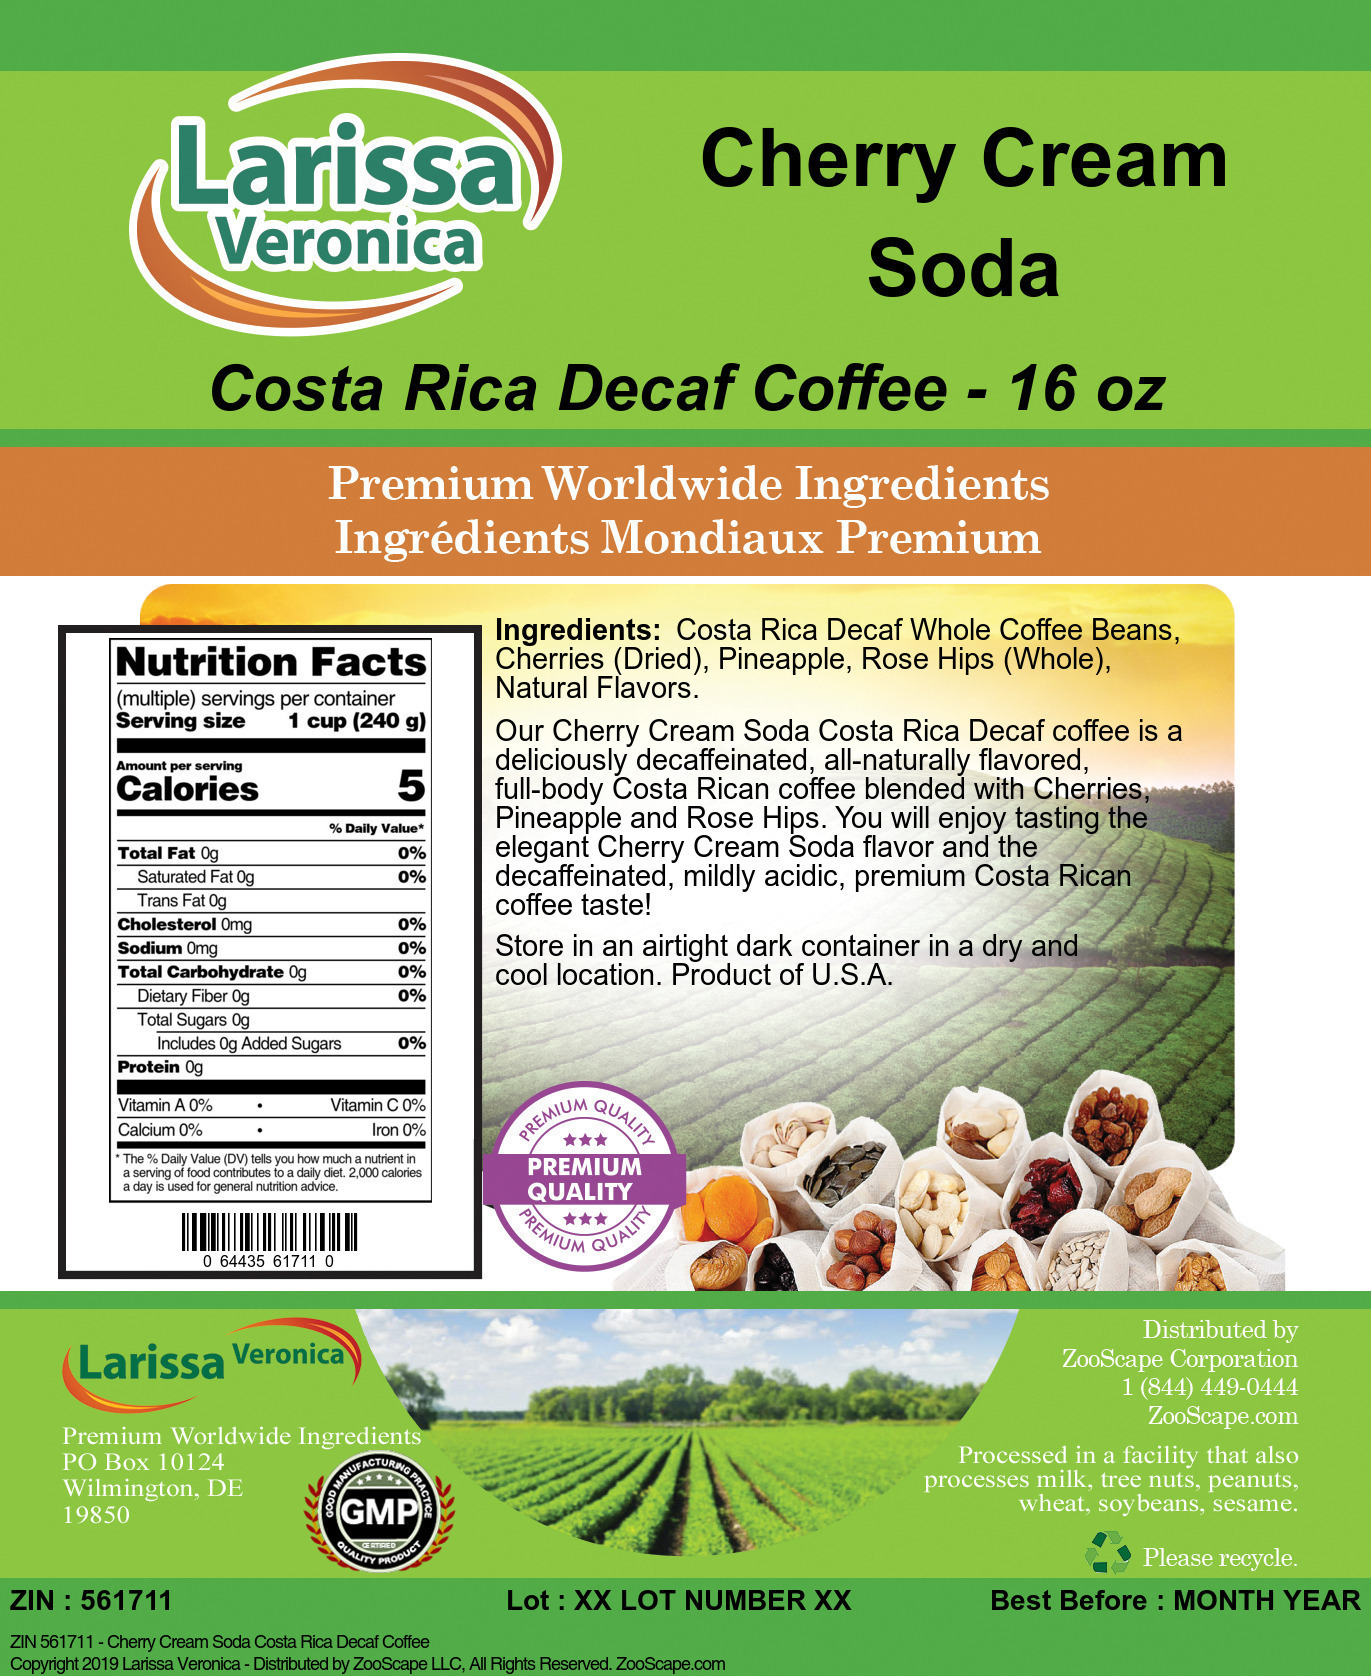 Cherry Cream Soda Costa Rica Decaf Coffee - Label